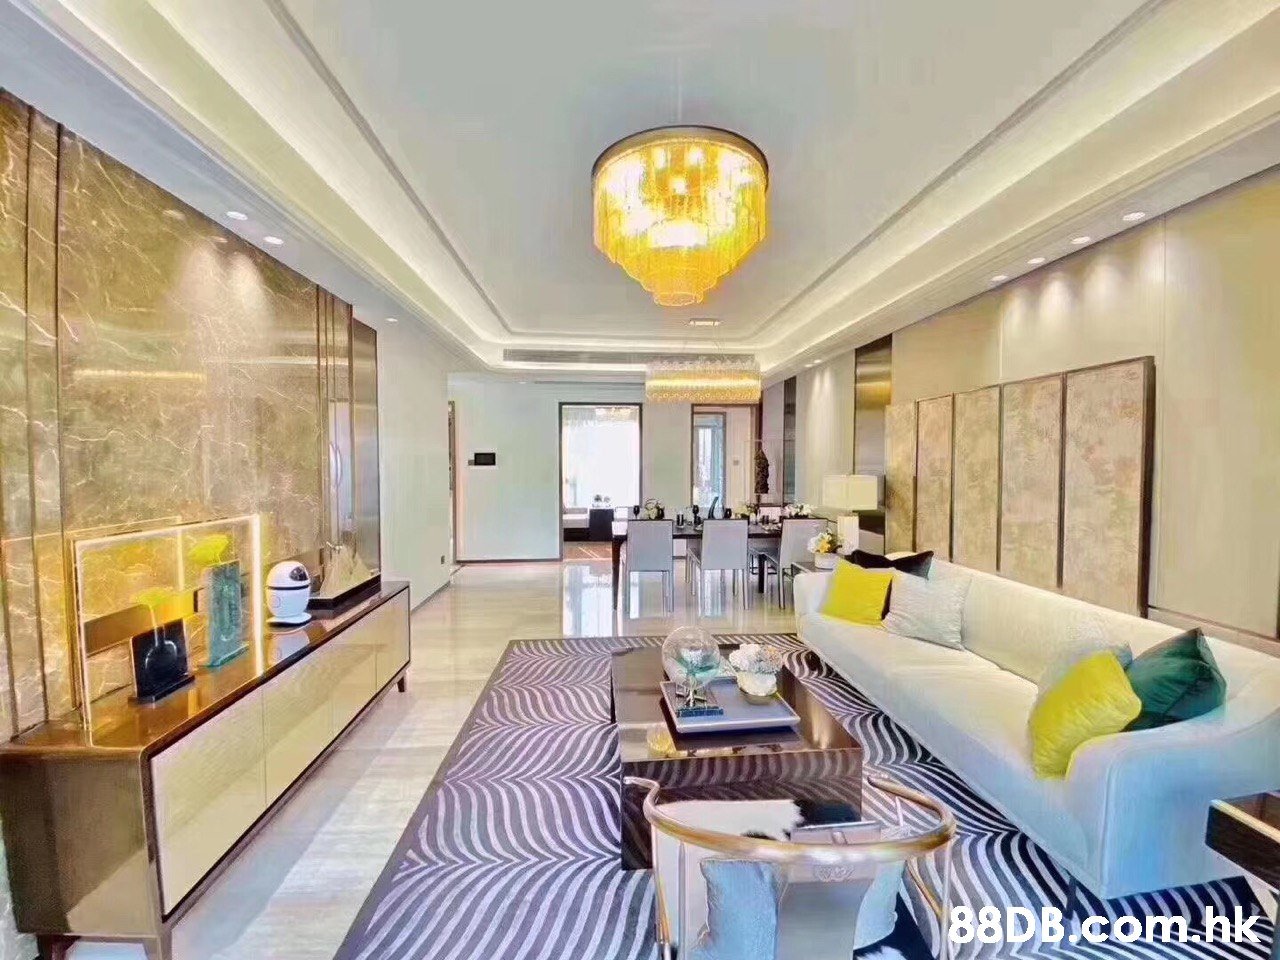  hk  Living room,Room,Interior design,Property,Building